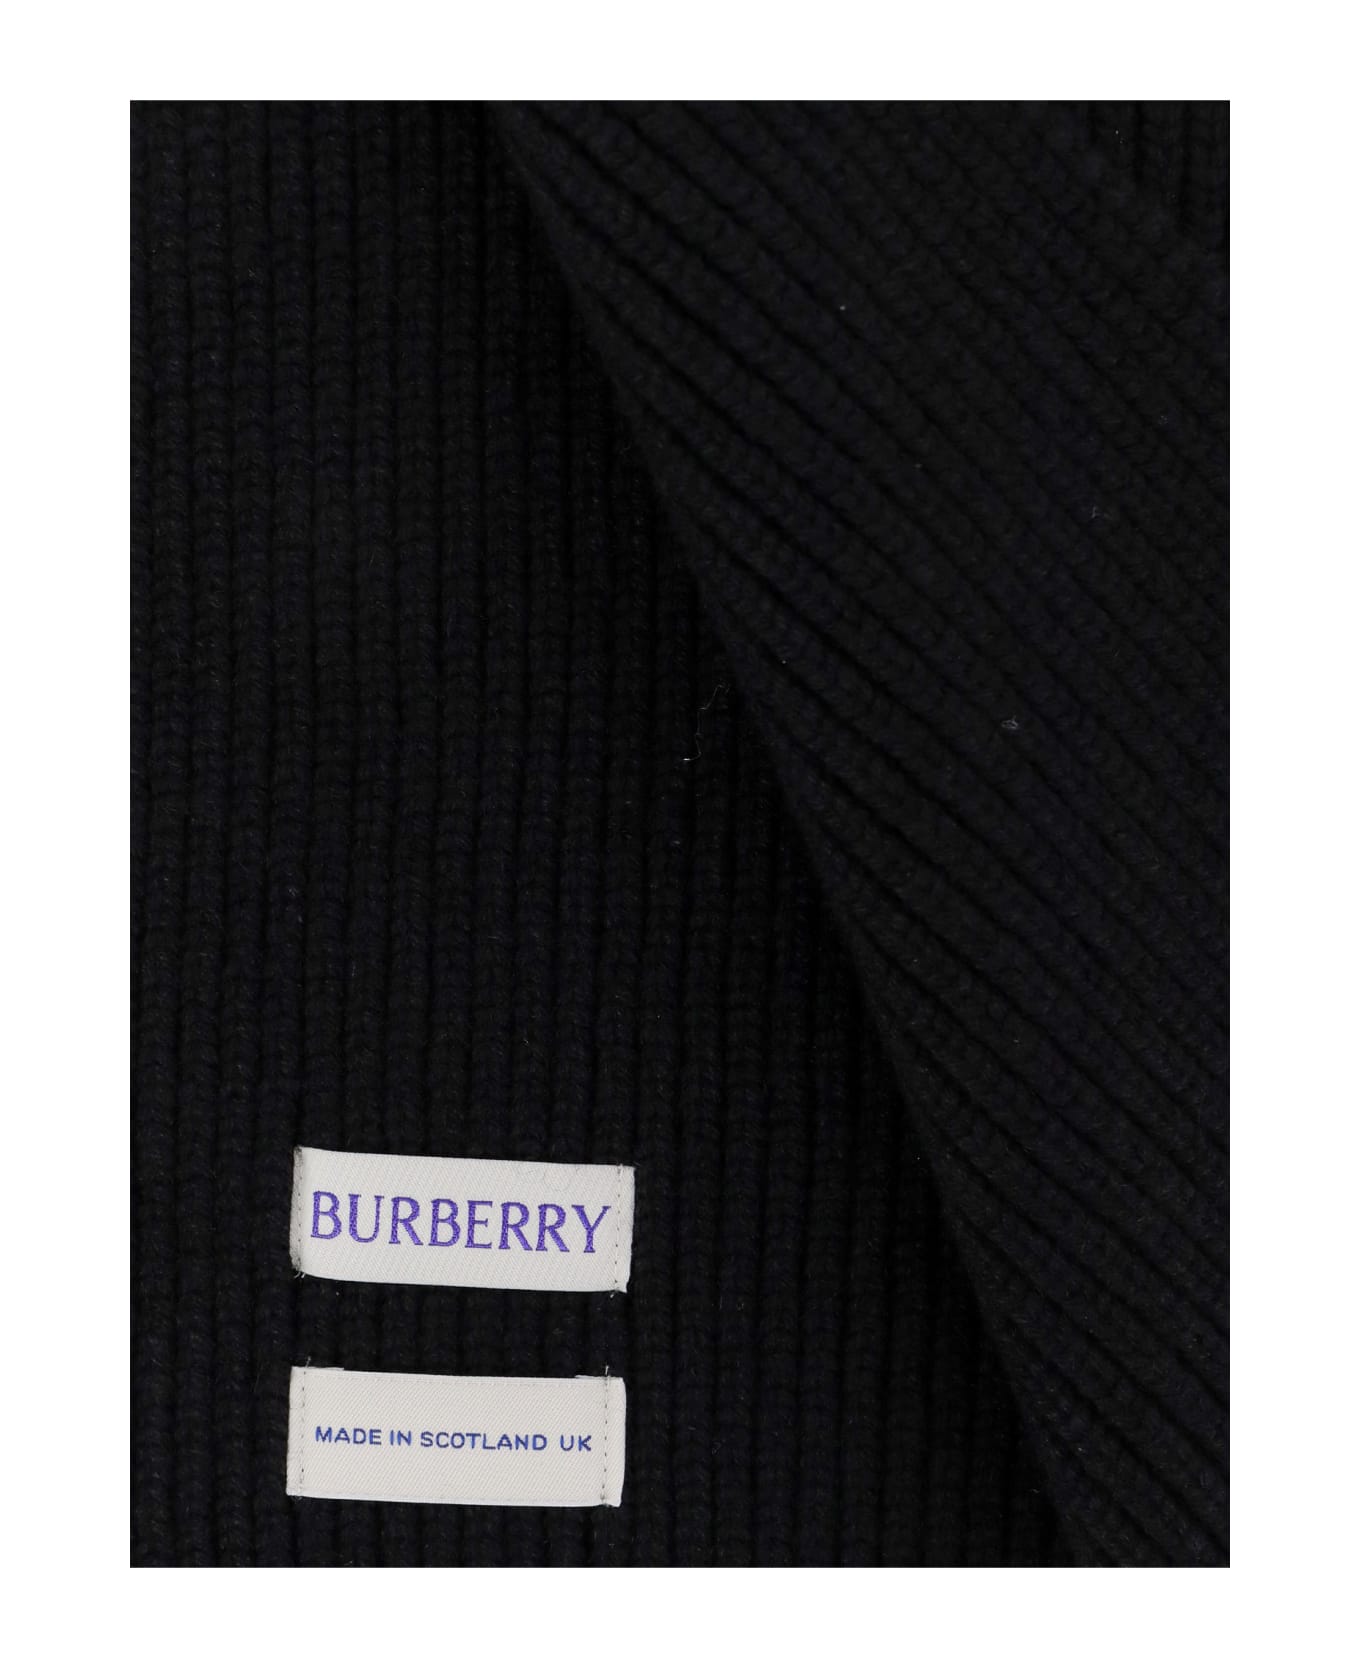 Burberry Scarf - Black